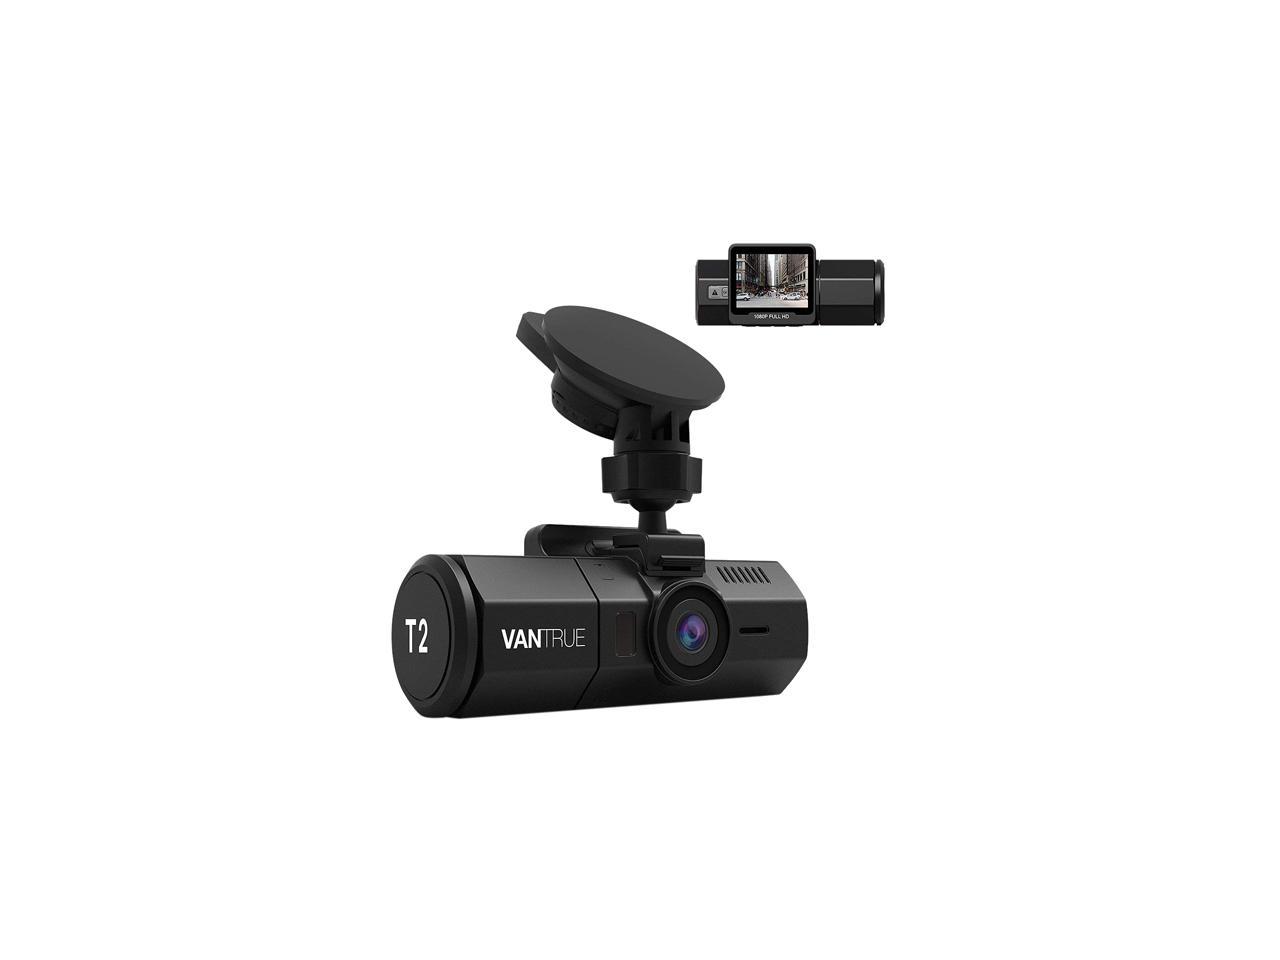 Sony Sensor Support 256GB Max Microwave Parking Mode Night Vision Vantrue T2 24 7 Recording Dash Cam Super Capacitor Car Camera 1920x1080P 2.0 Inch LCD 160 Degree OBD2 Dashboard Camera 